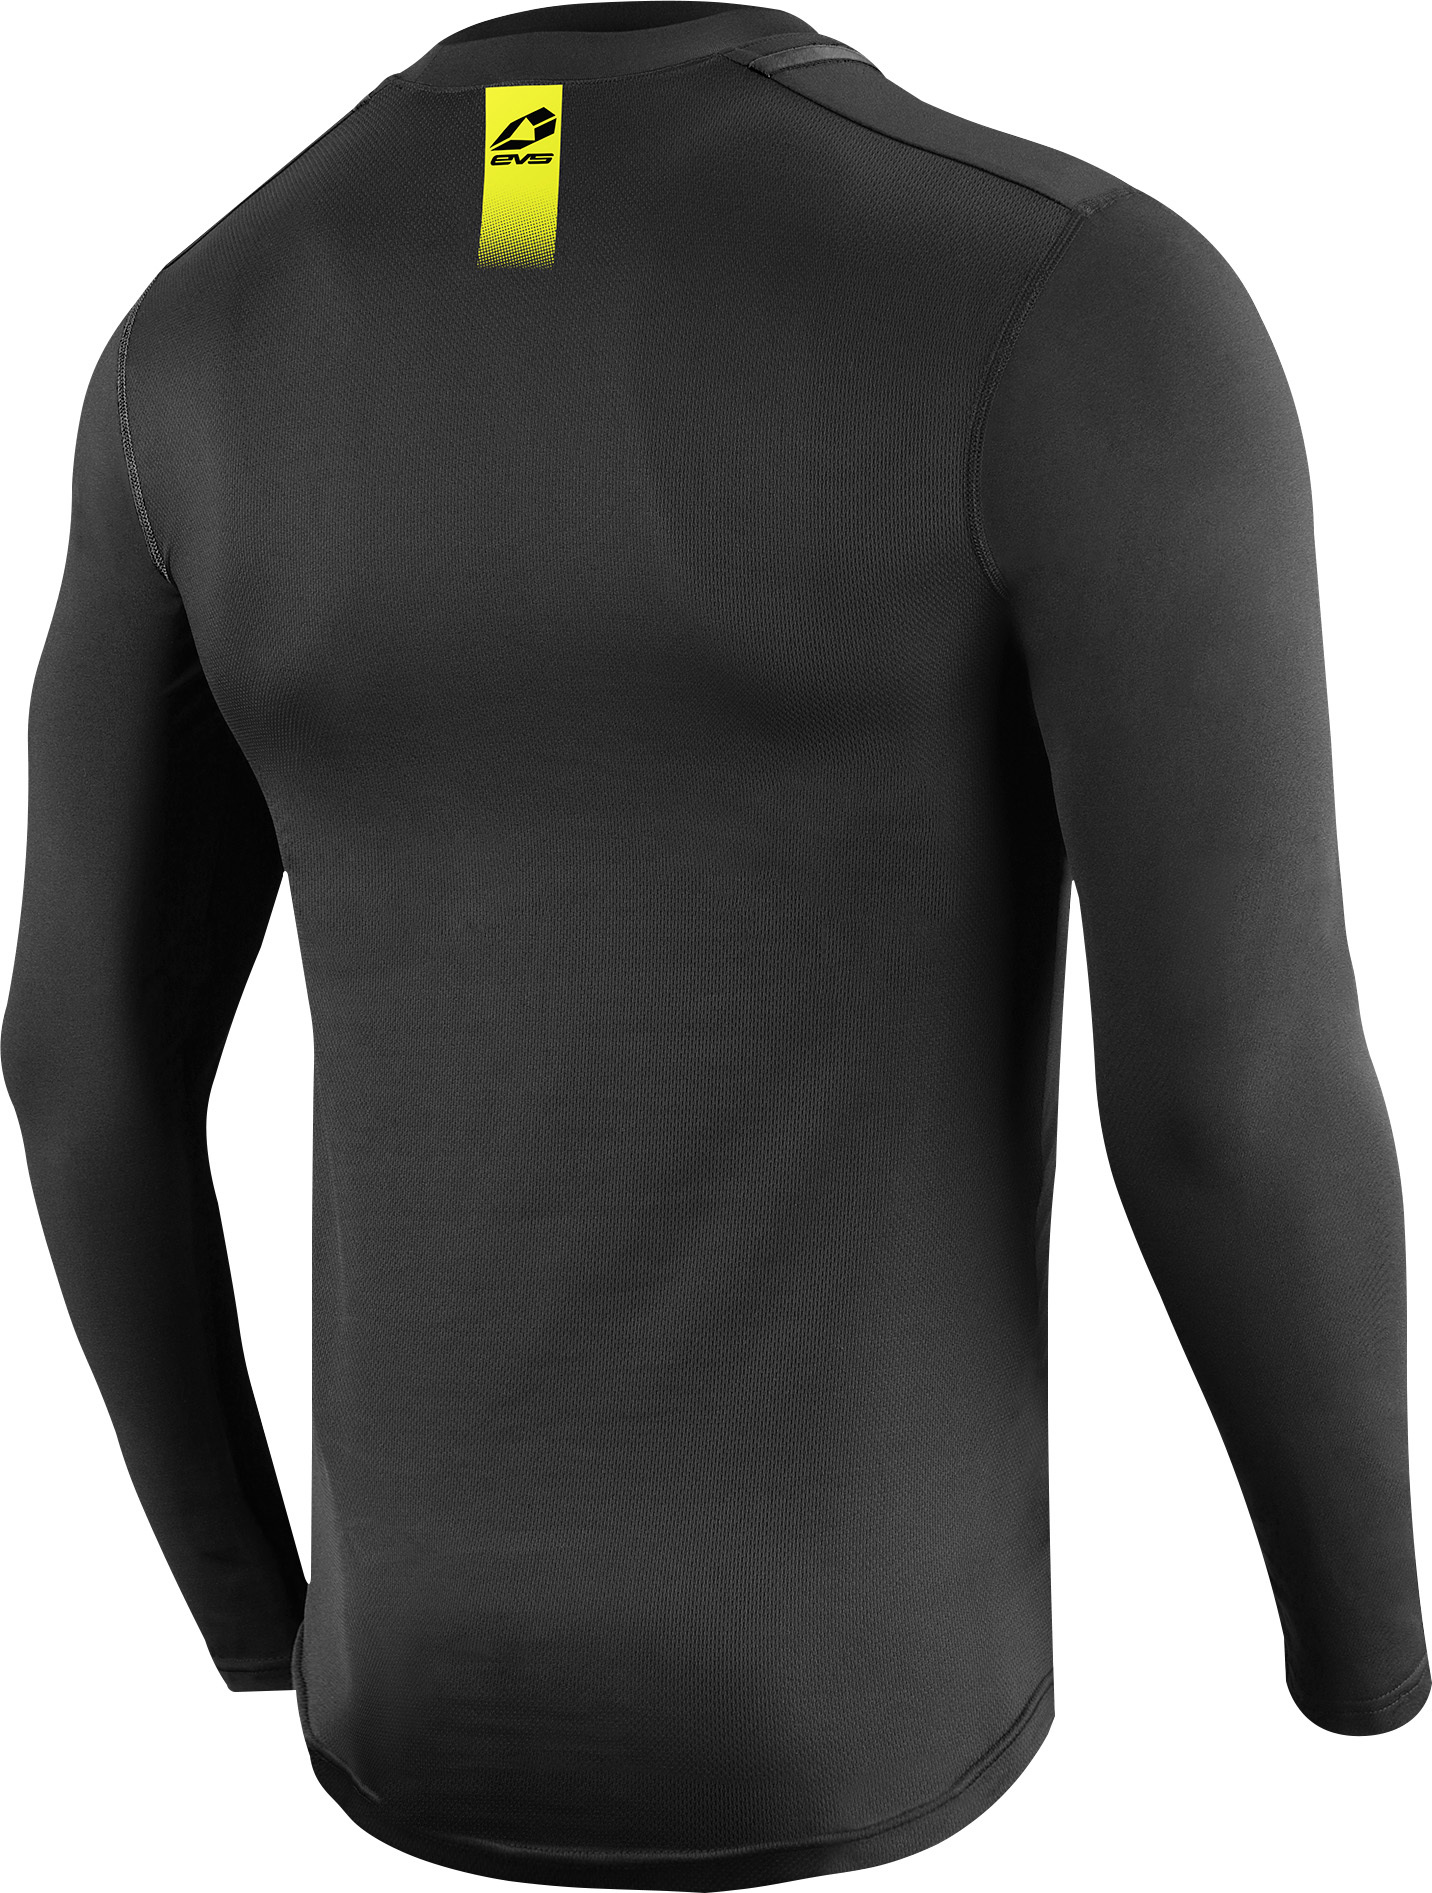 Long Sleeve Tug Shirt Black Large - Click Image to Close